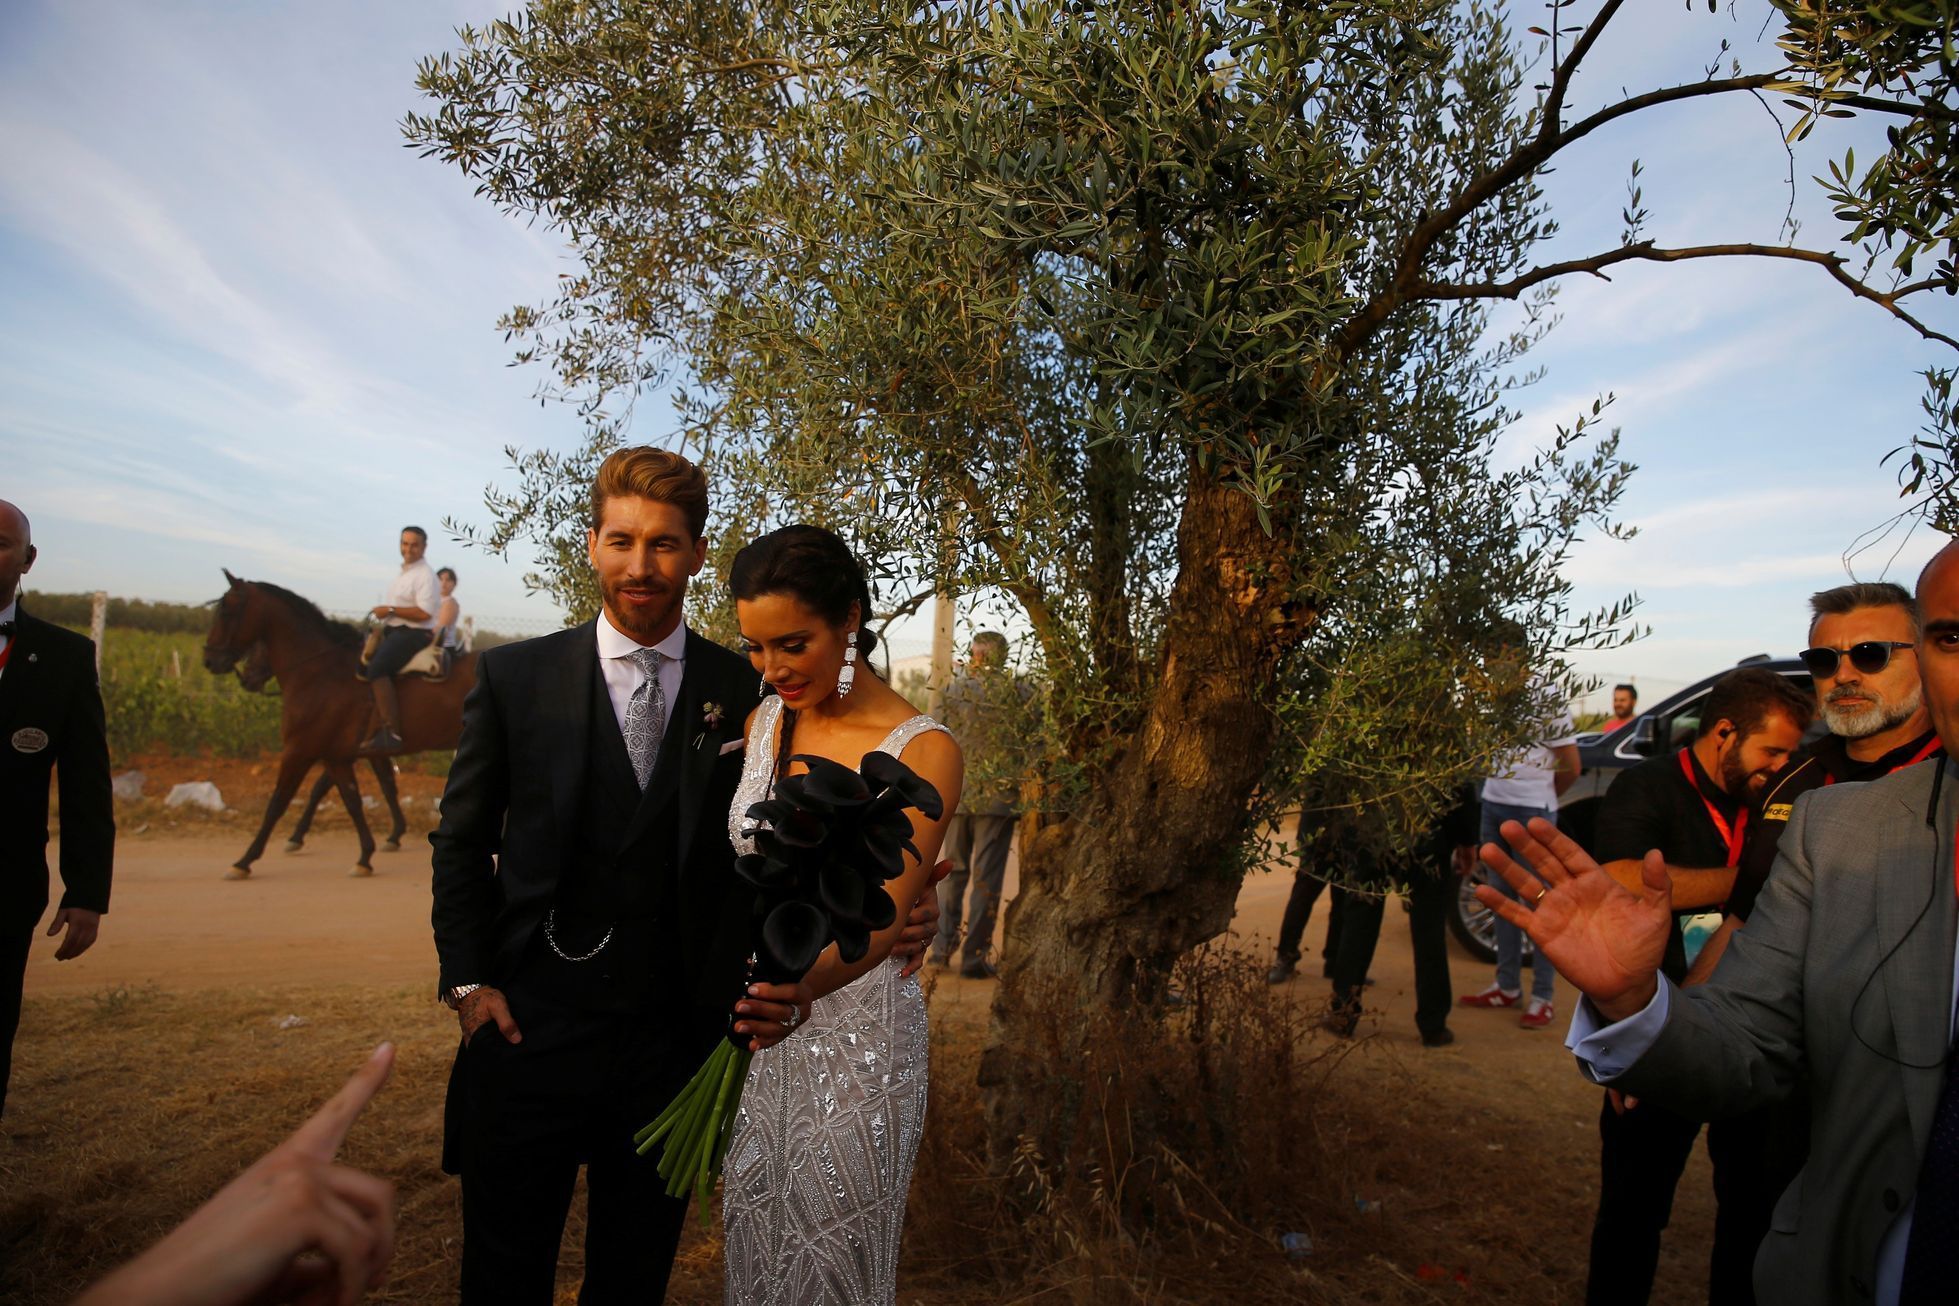 Real Madrid captain Ramos' wedding in Seville